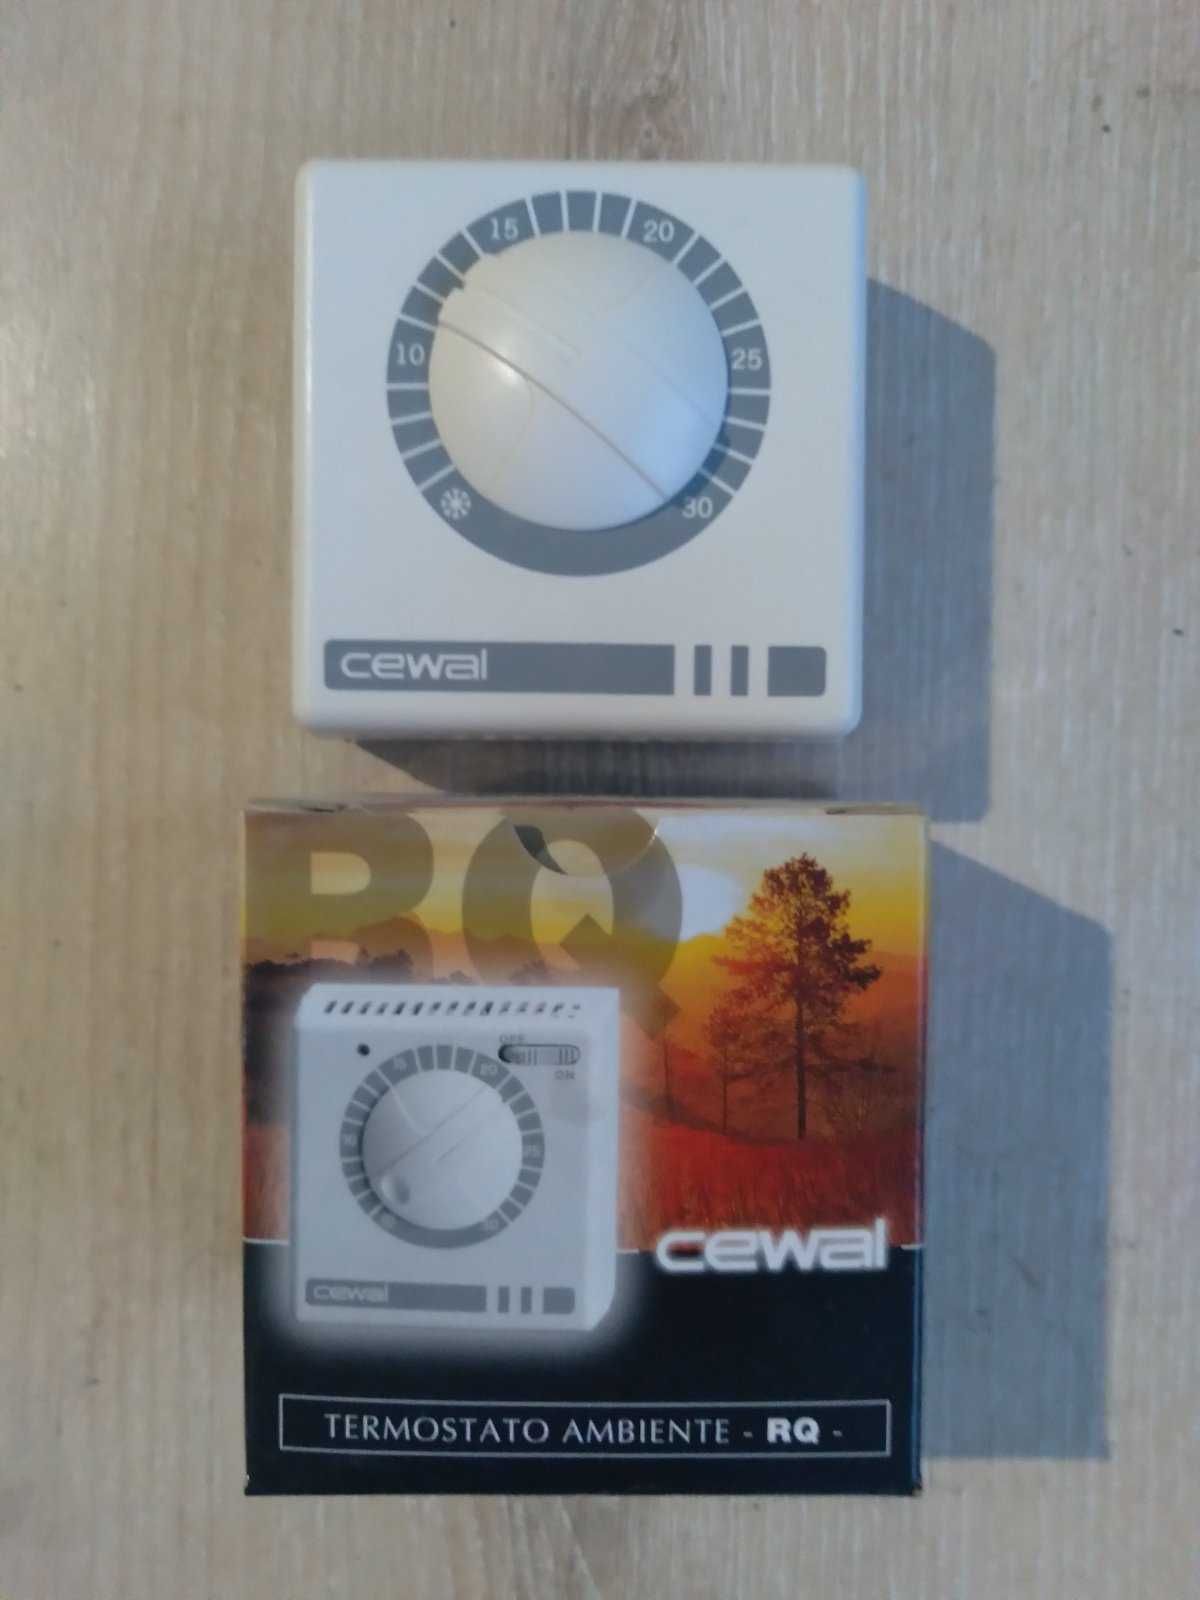 комнатный термостат модели CEWAL терморегулятор для тёплого пола